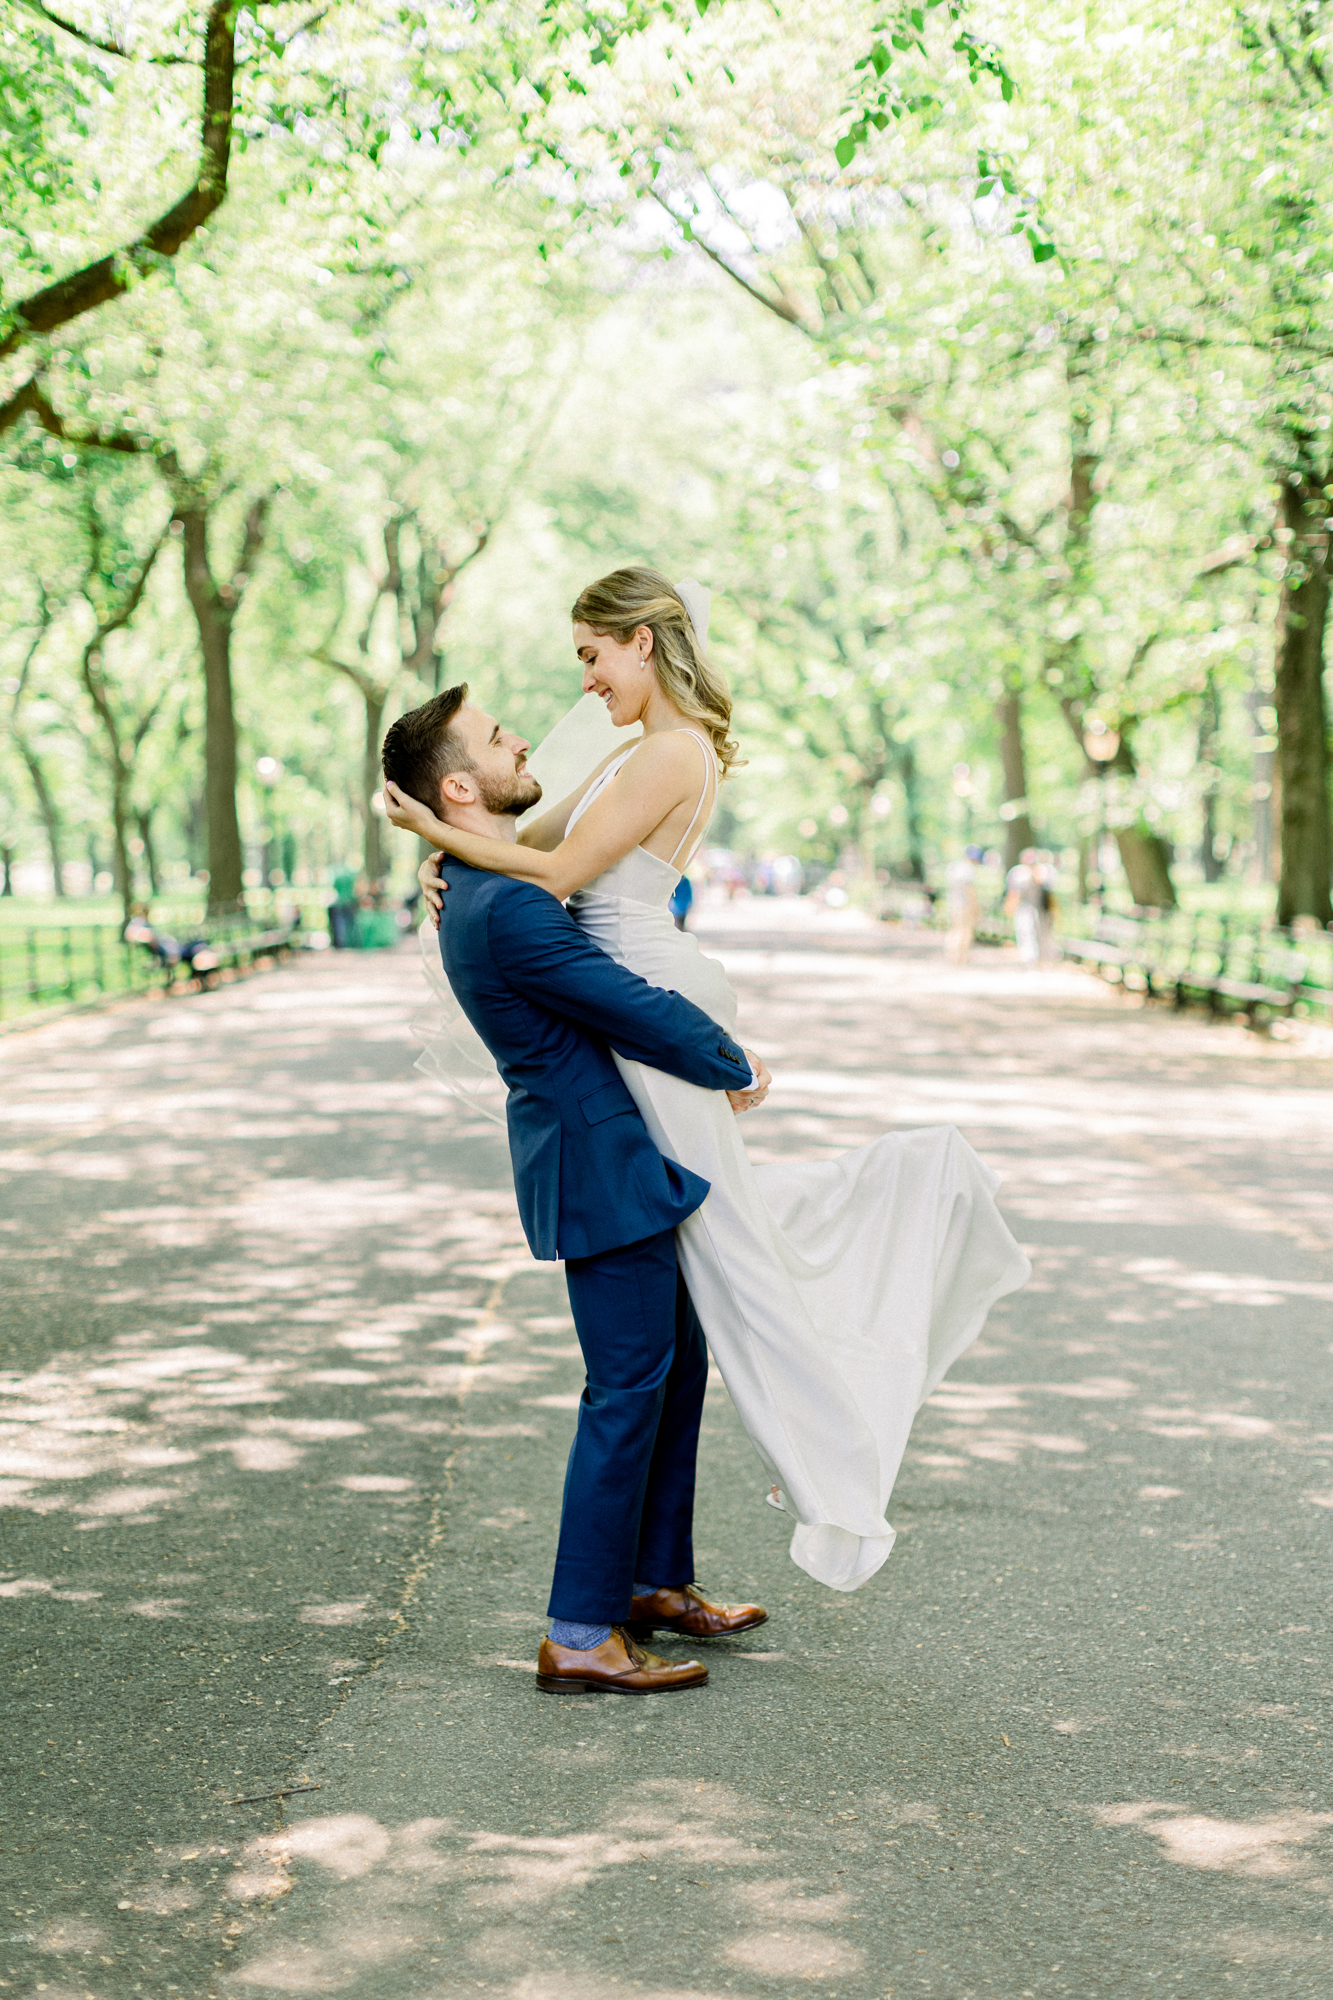 Romantic Wisteria Pergola Elopement Photos in New York\'s Central Park